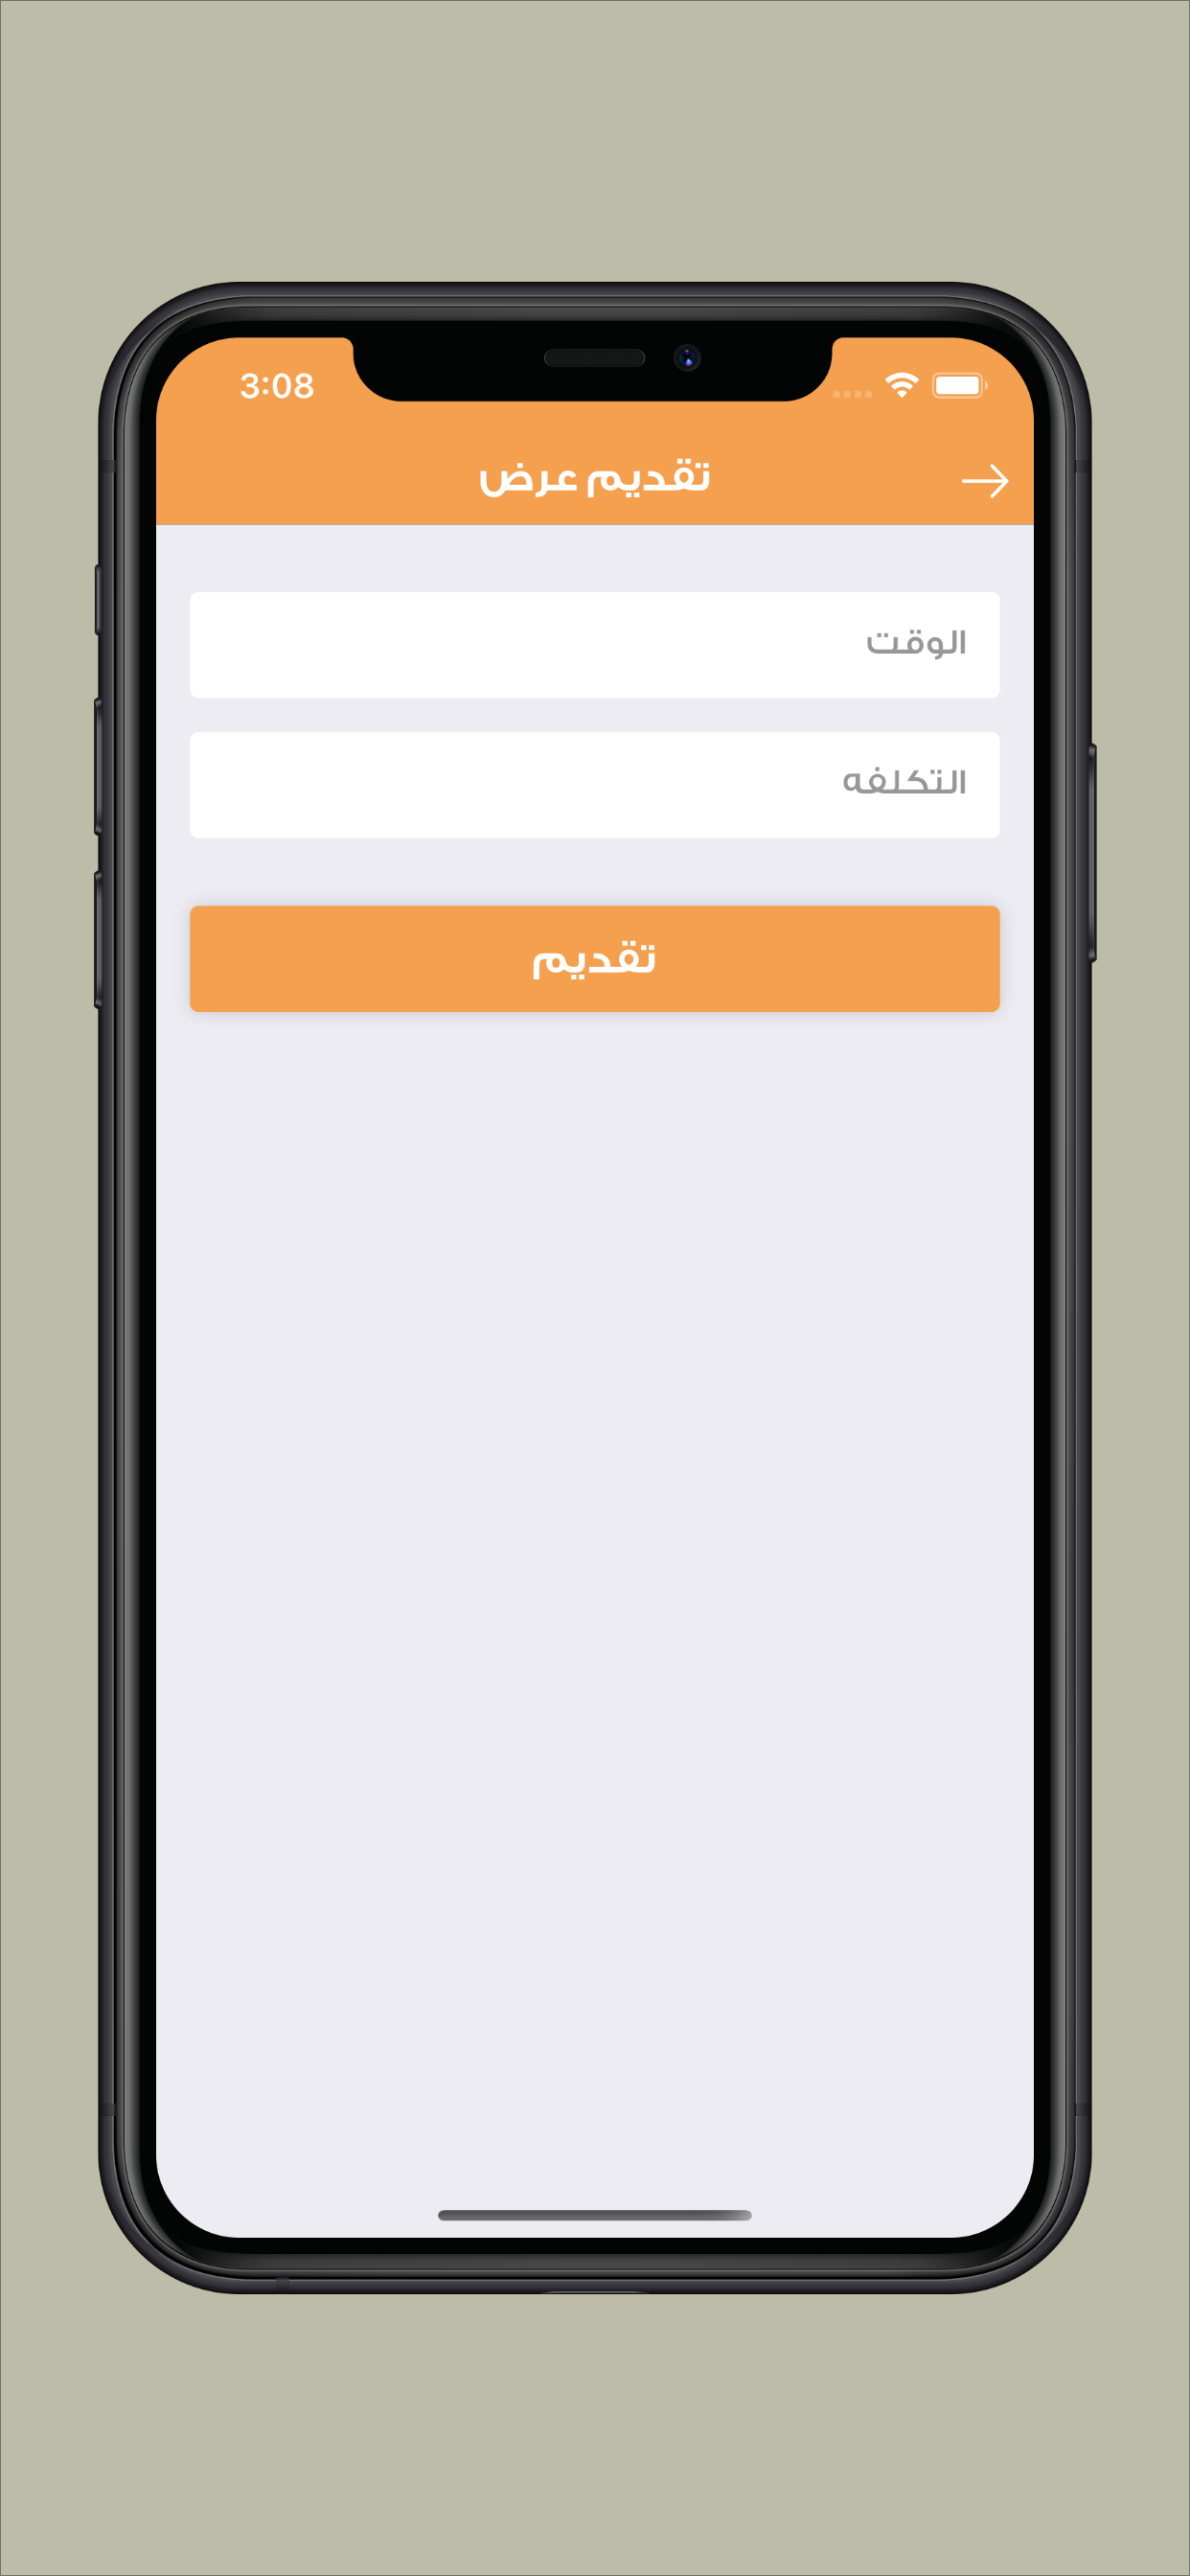 Abdelrahman Algazzar - تطبيق إيرور